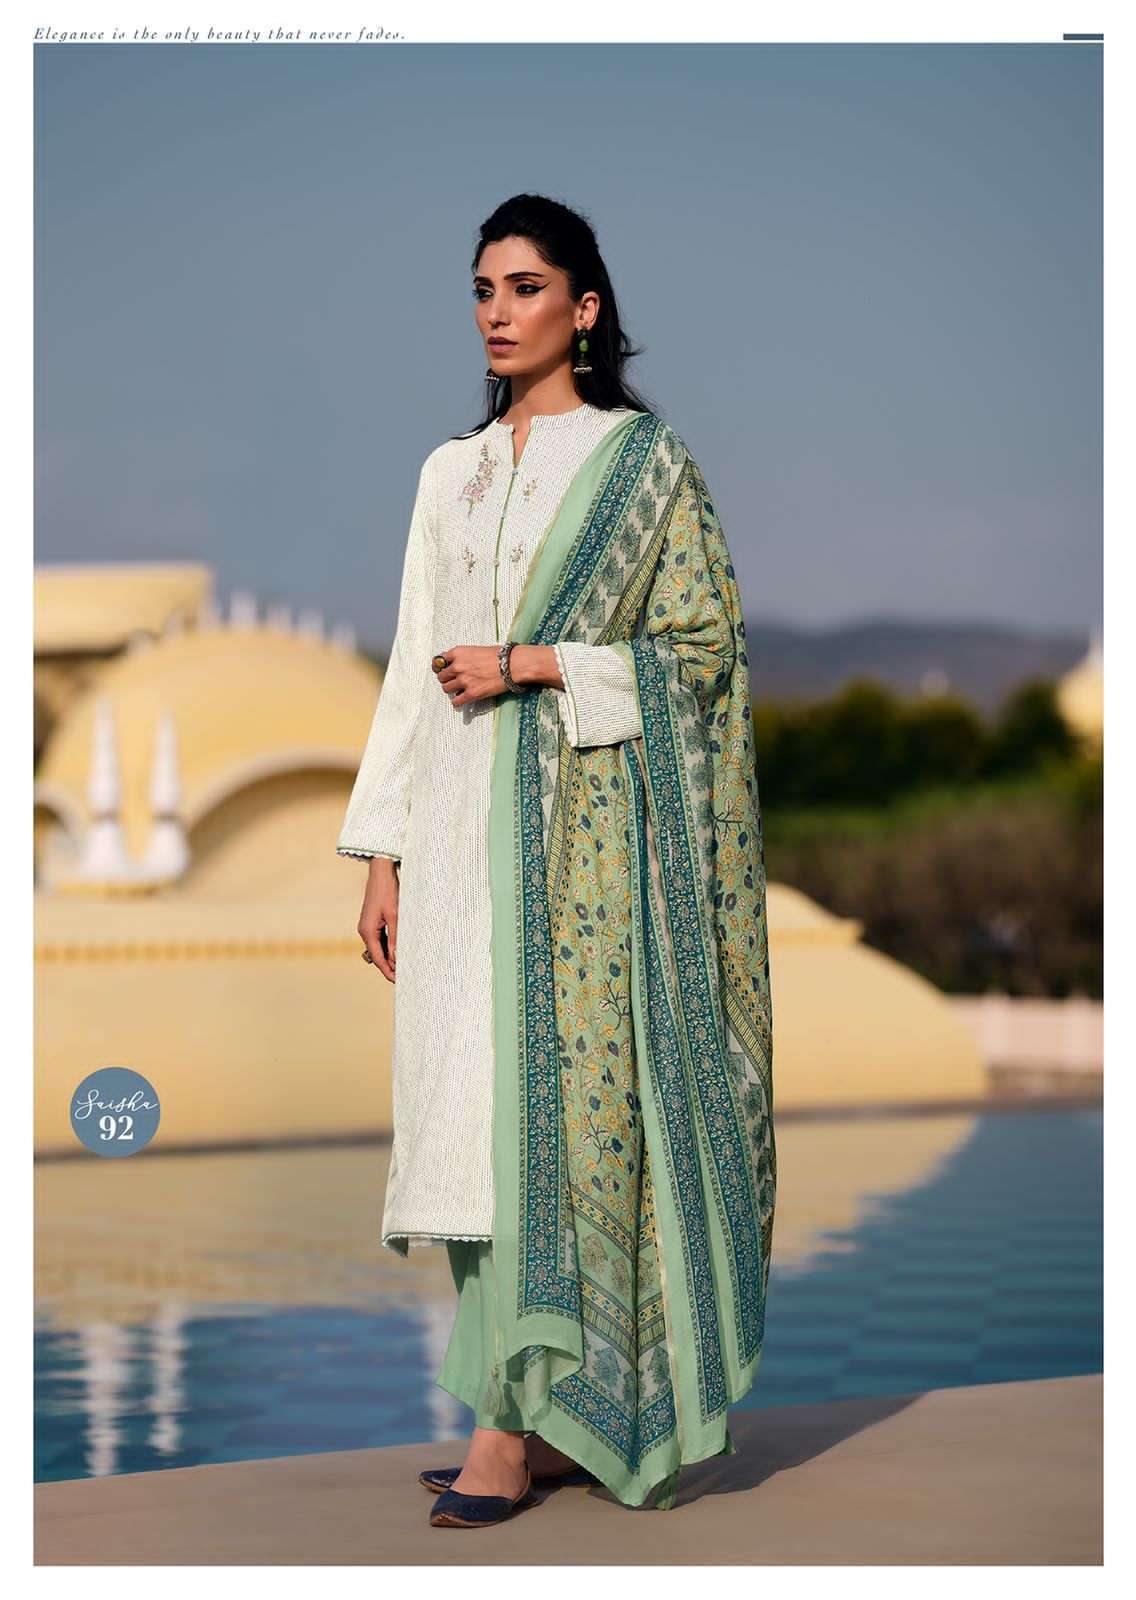 varsha fashion saisha 91-93 series indian designer salwar kameez manufacturer surat